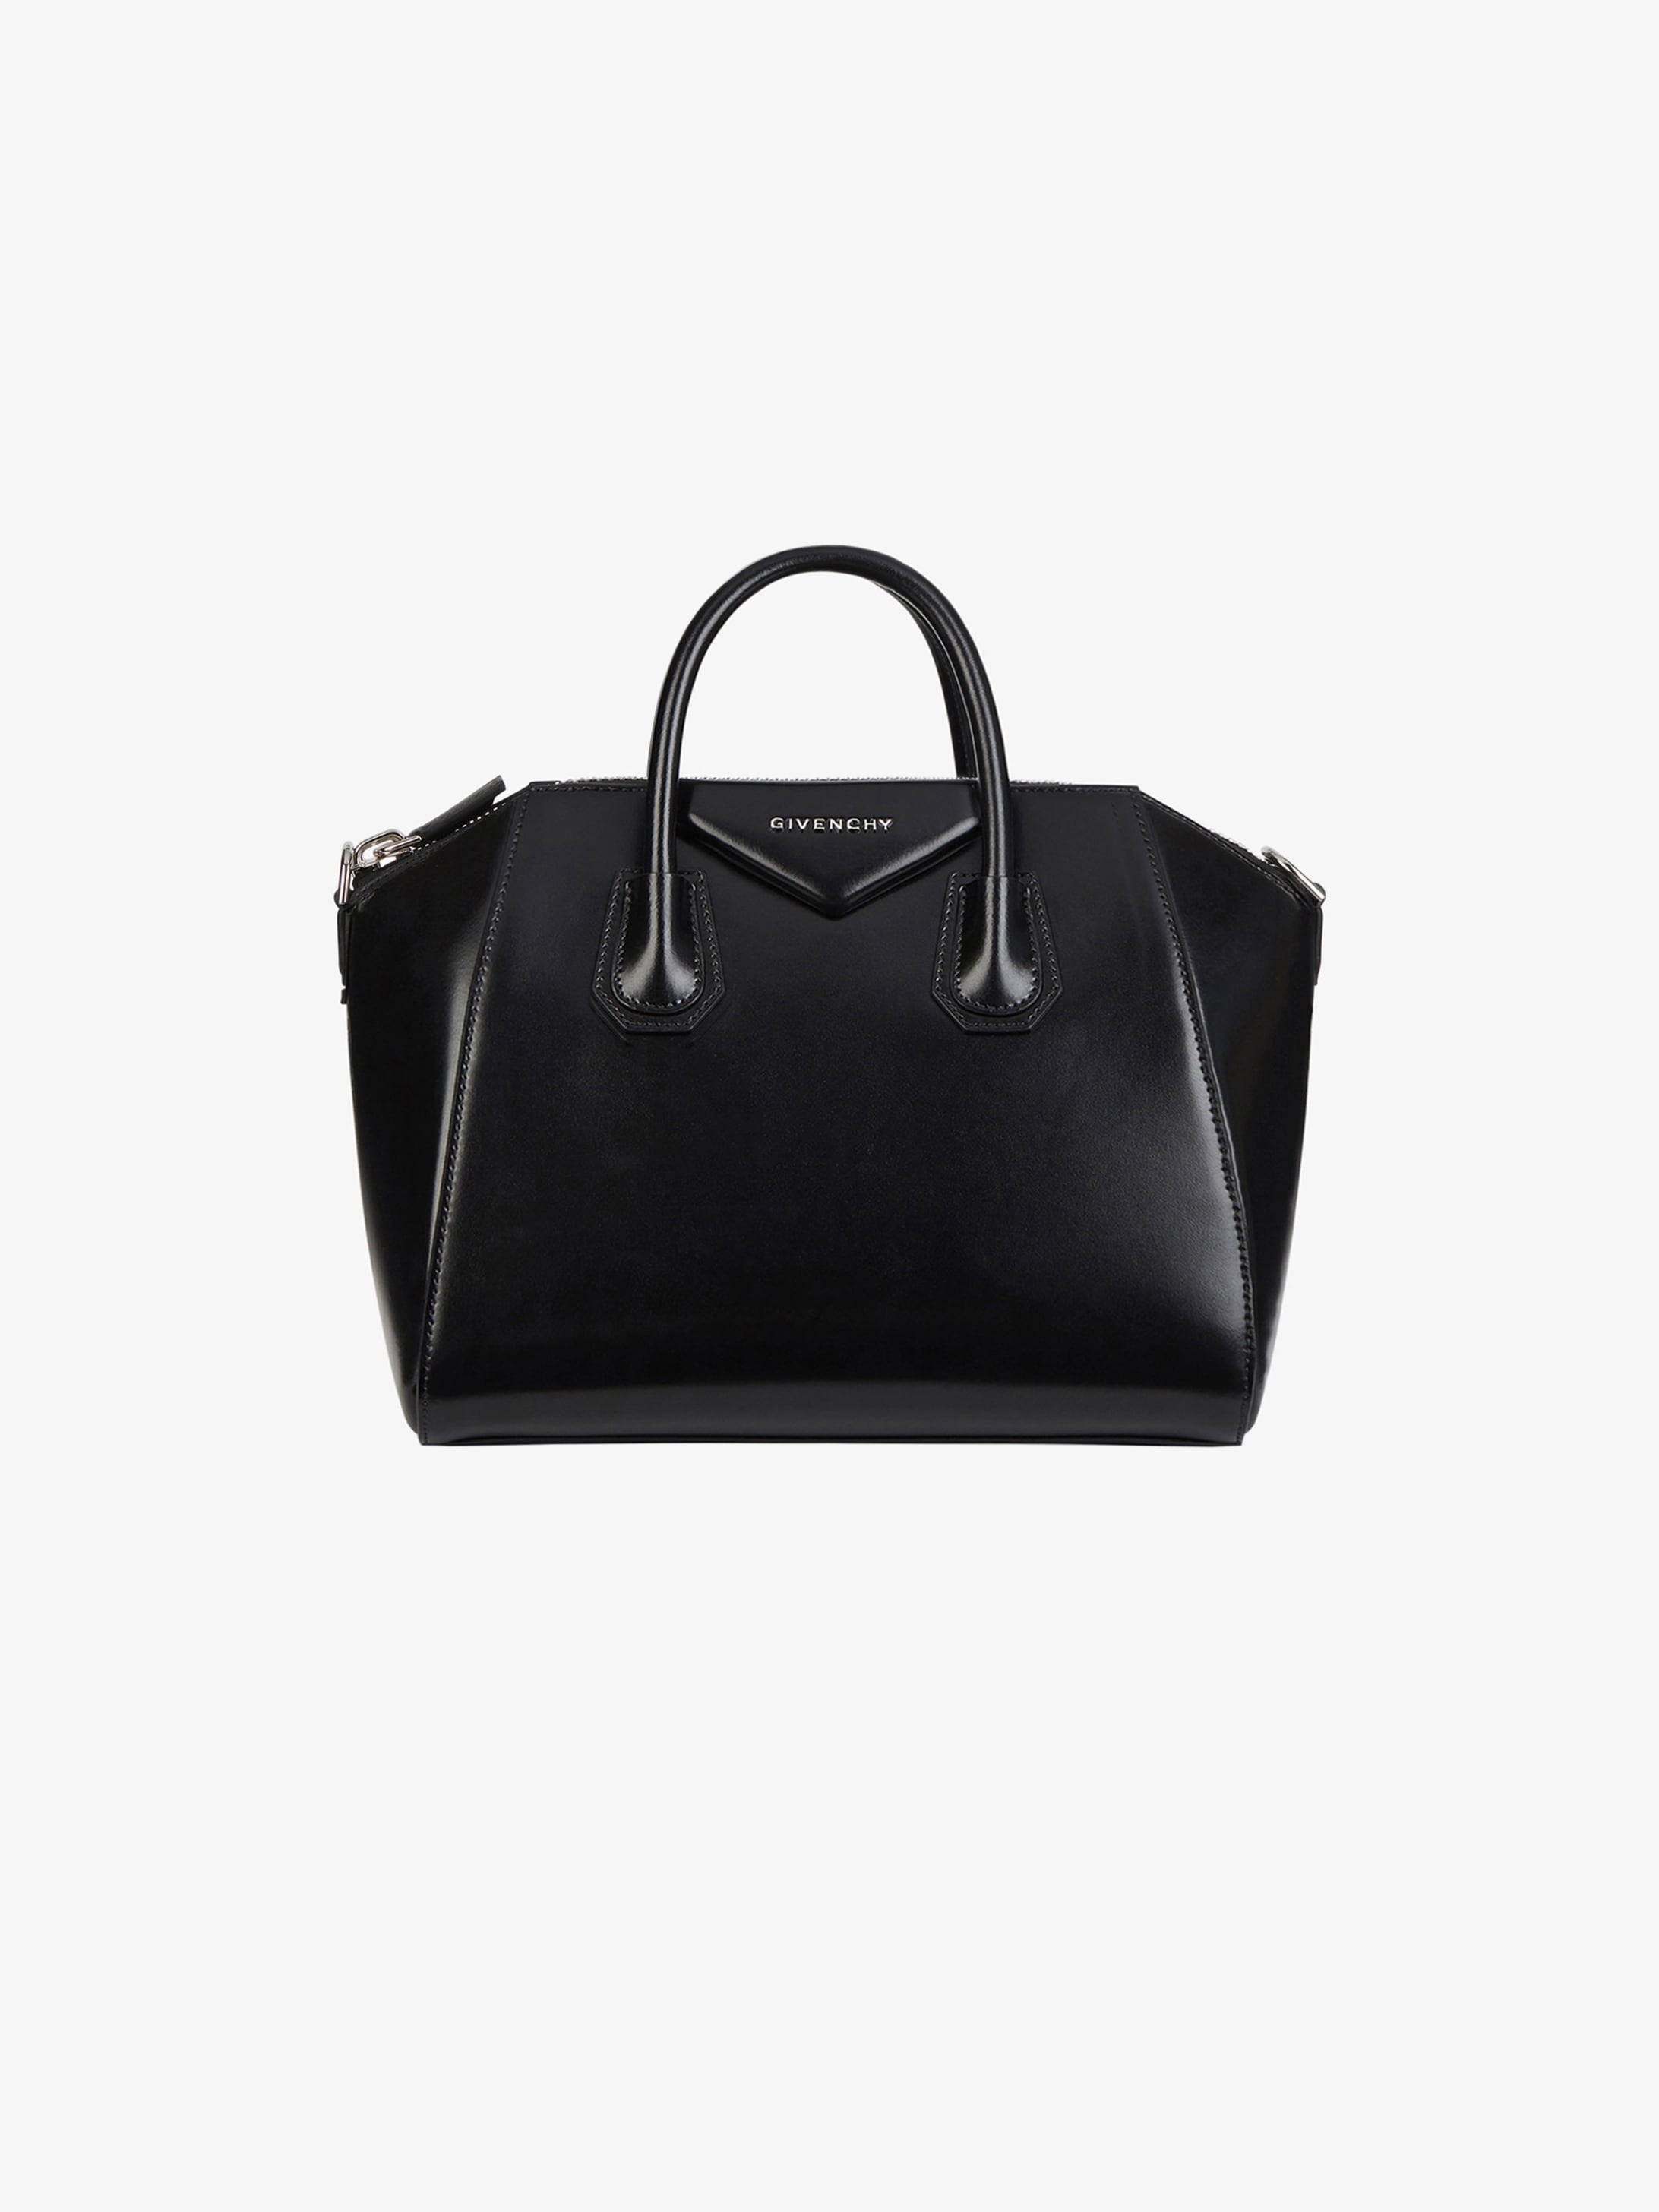 black leather givenchy bag